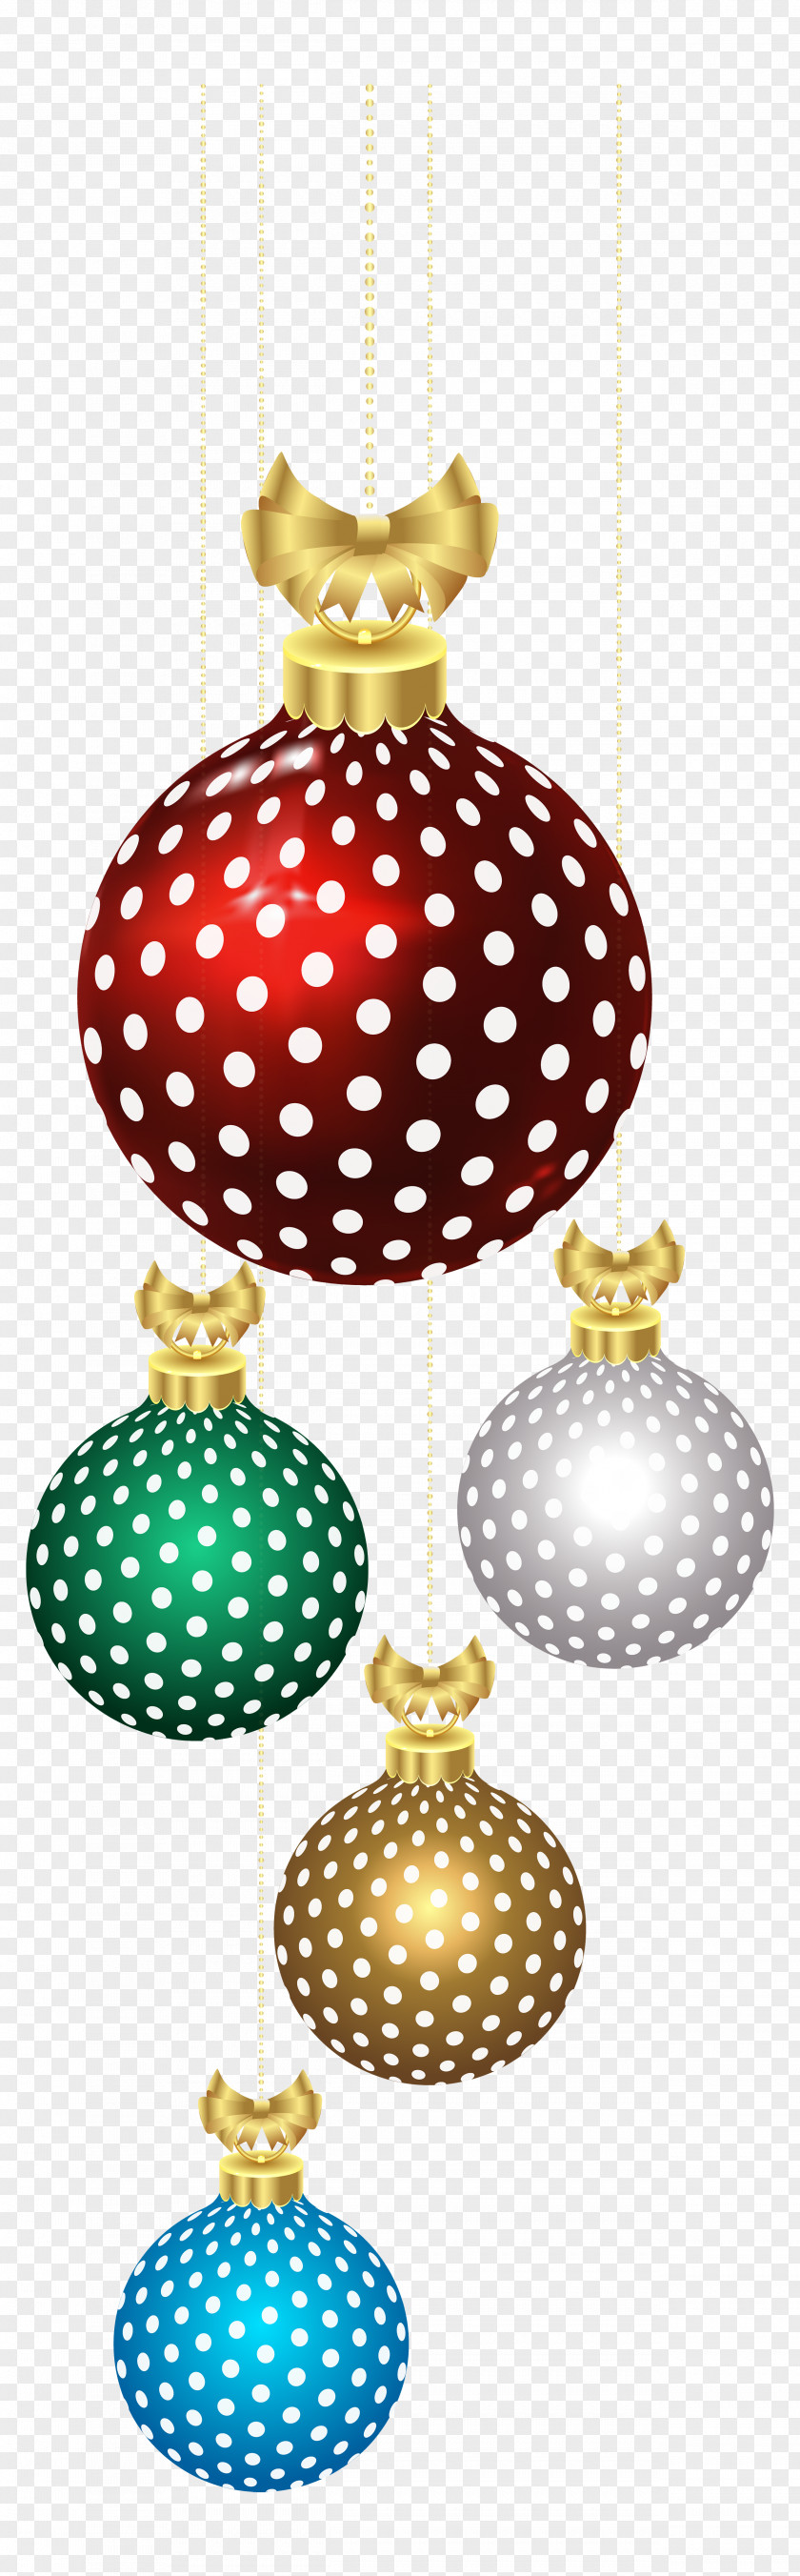 Christmas Balls Decoration Clip Art Image Rudolph PNG